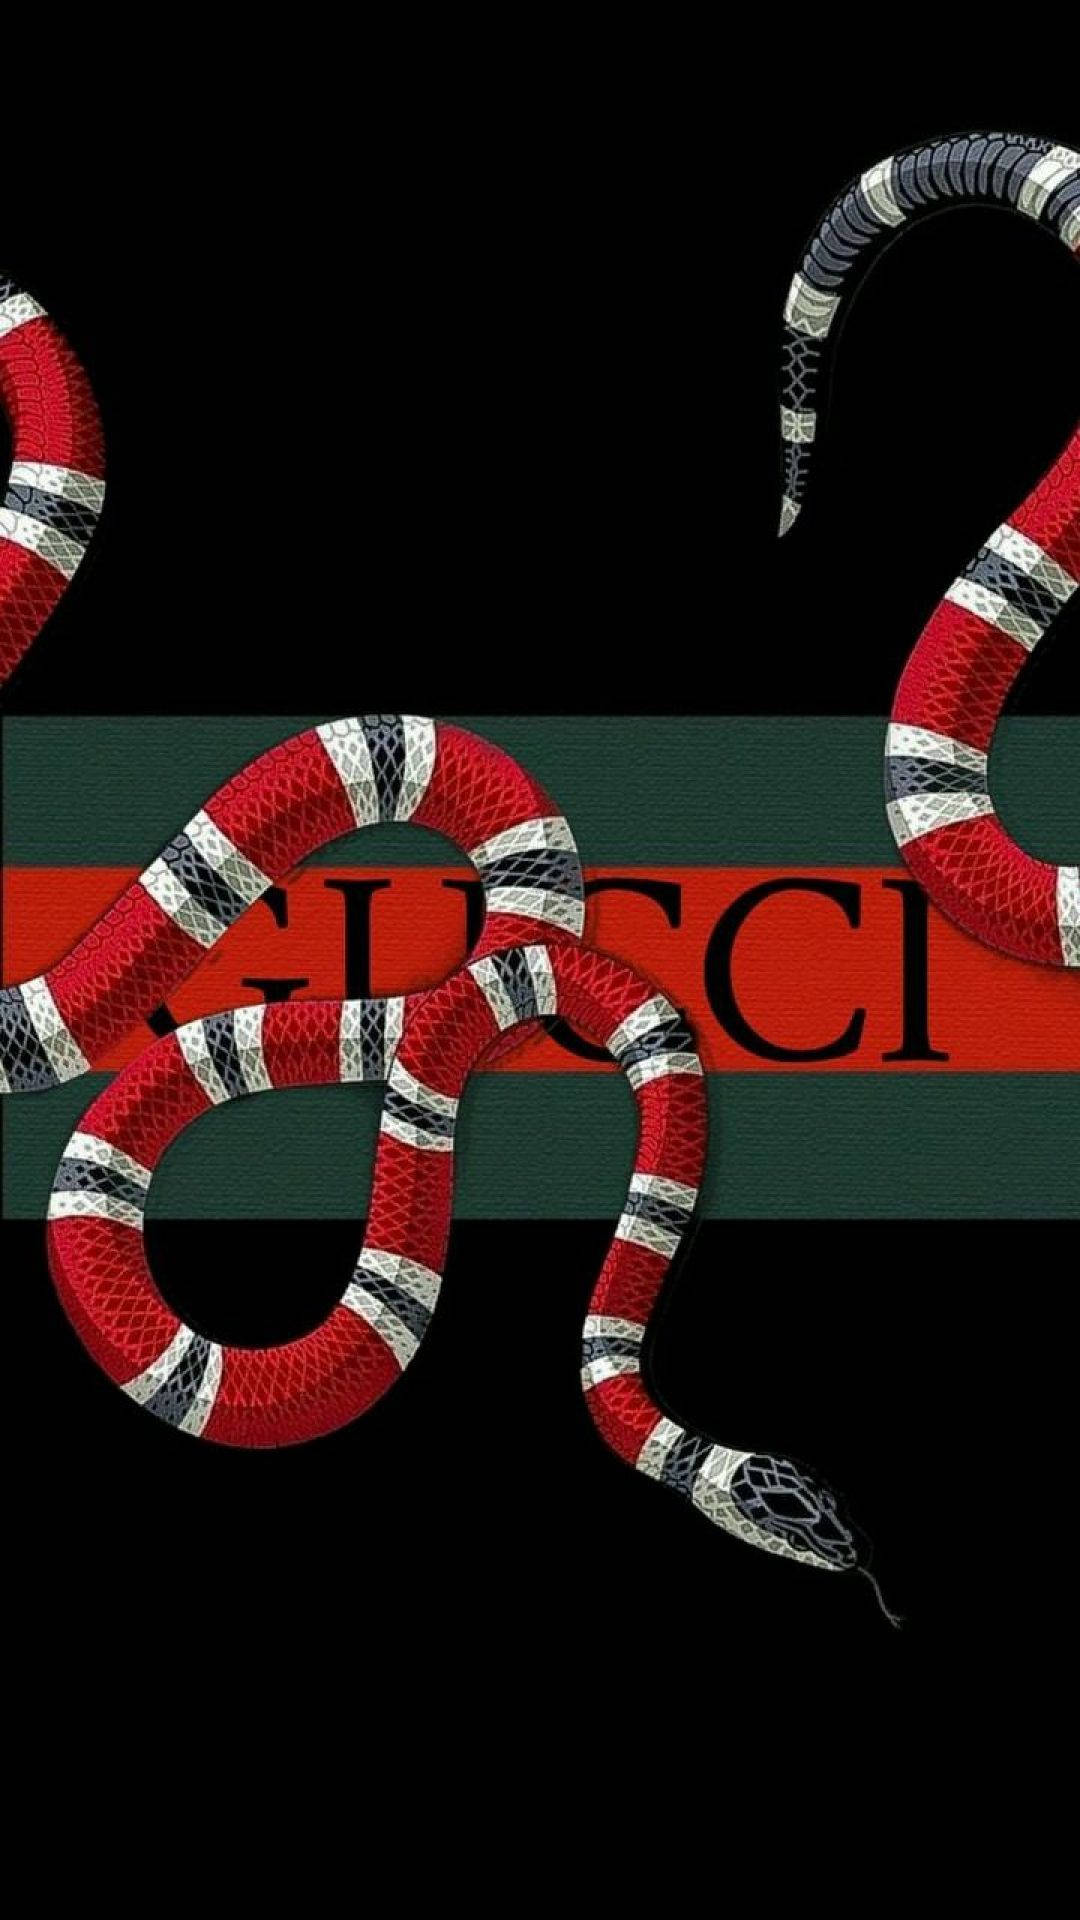 feedback Perth Blackborough complicaties Download Texas Coral Snake With Gucci Logo Wallpaper | Wallpapers.com